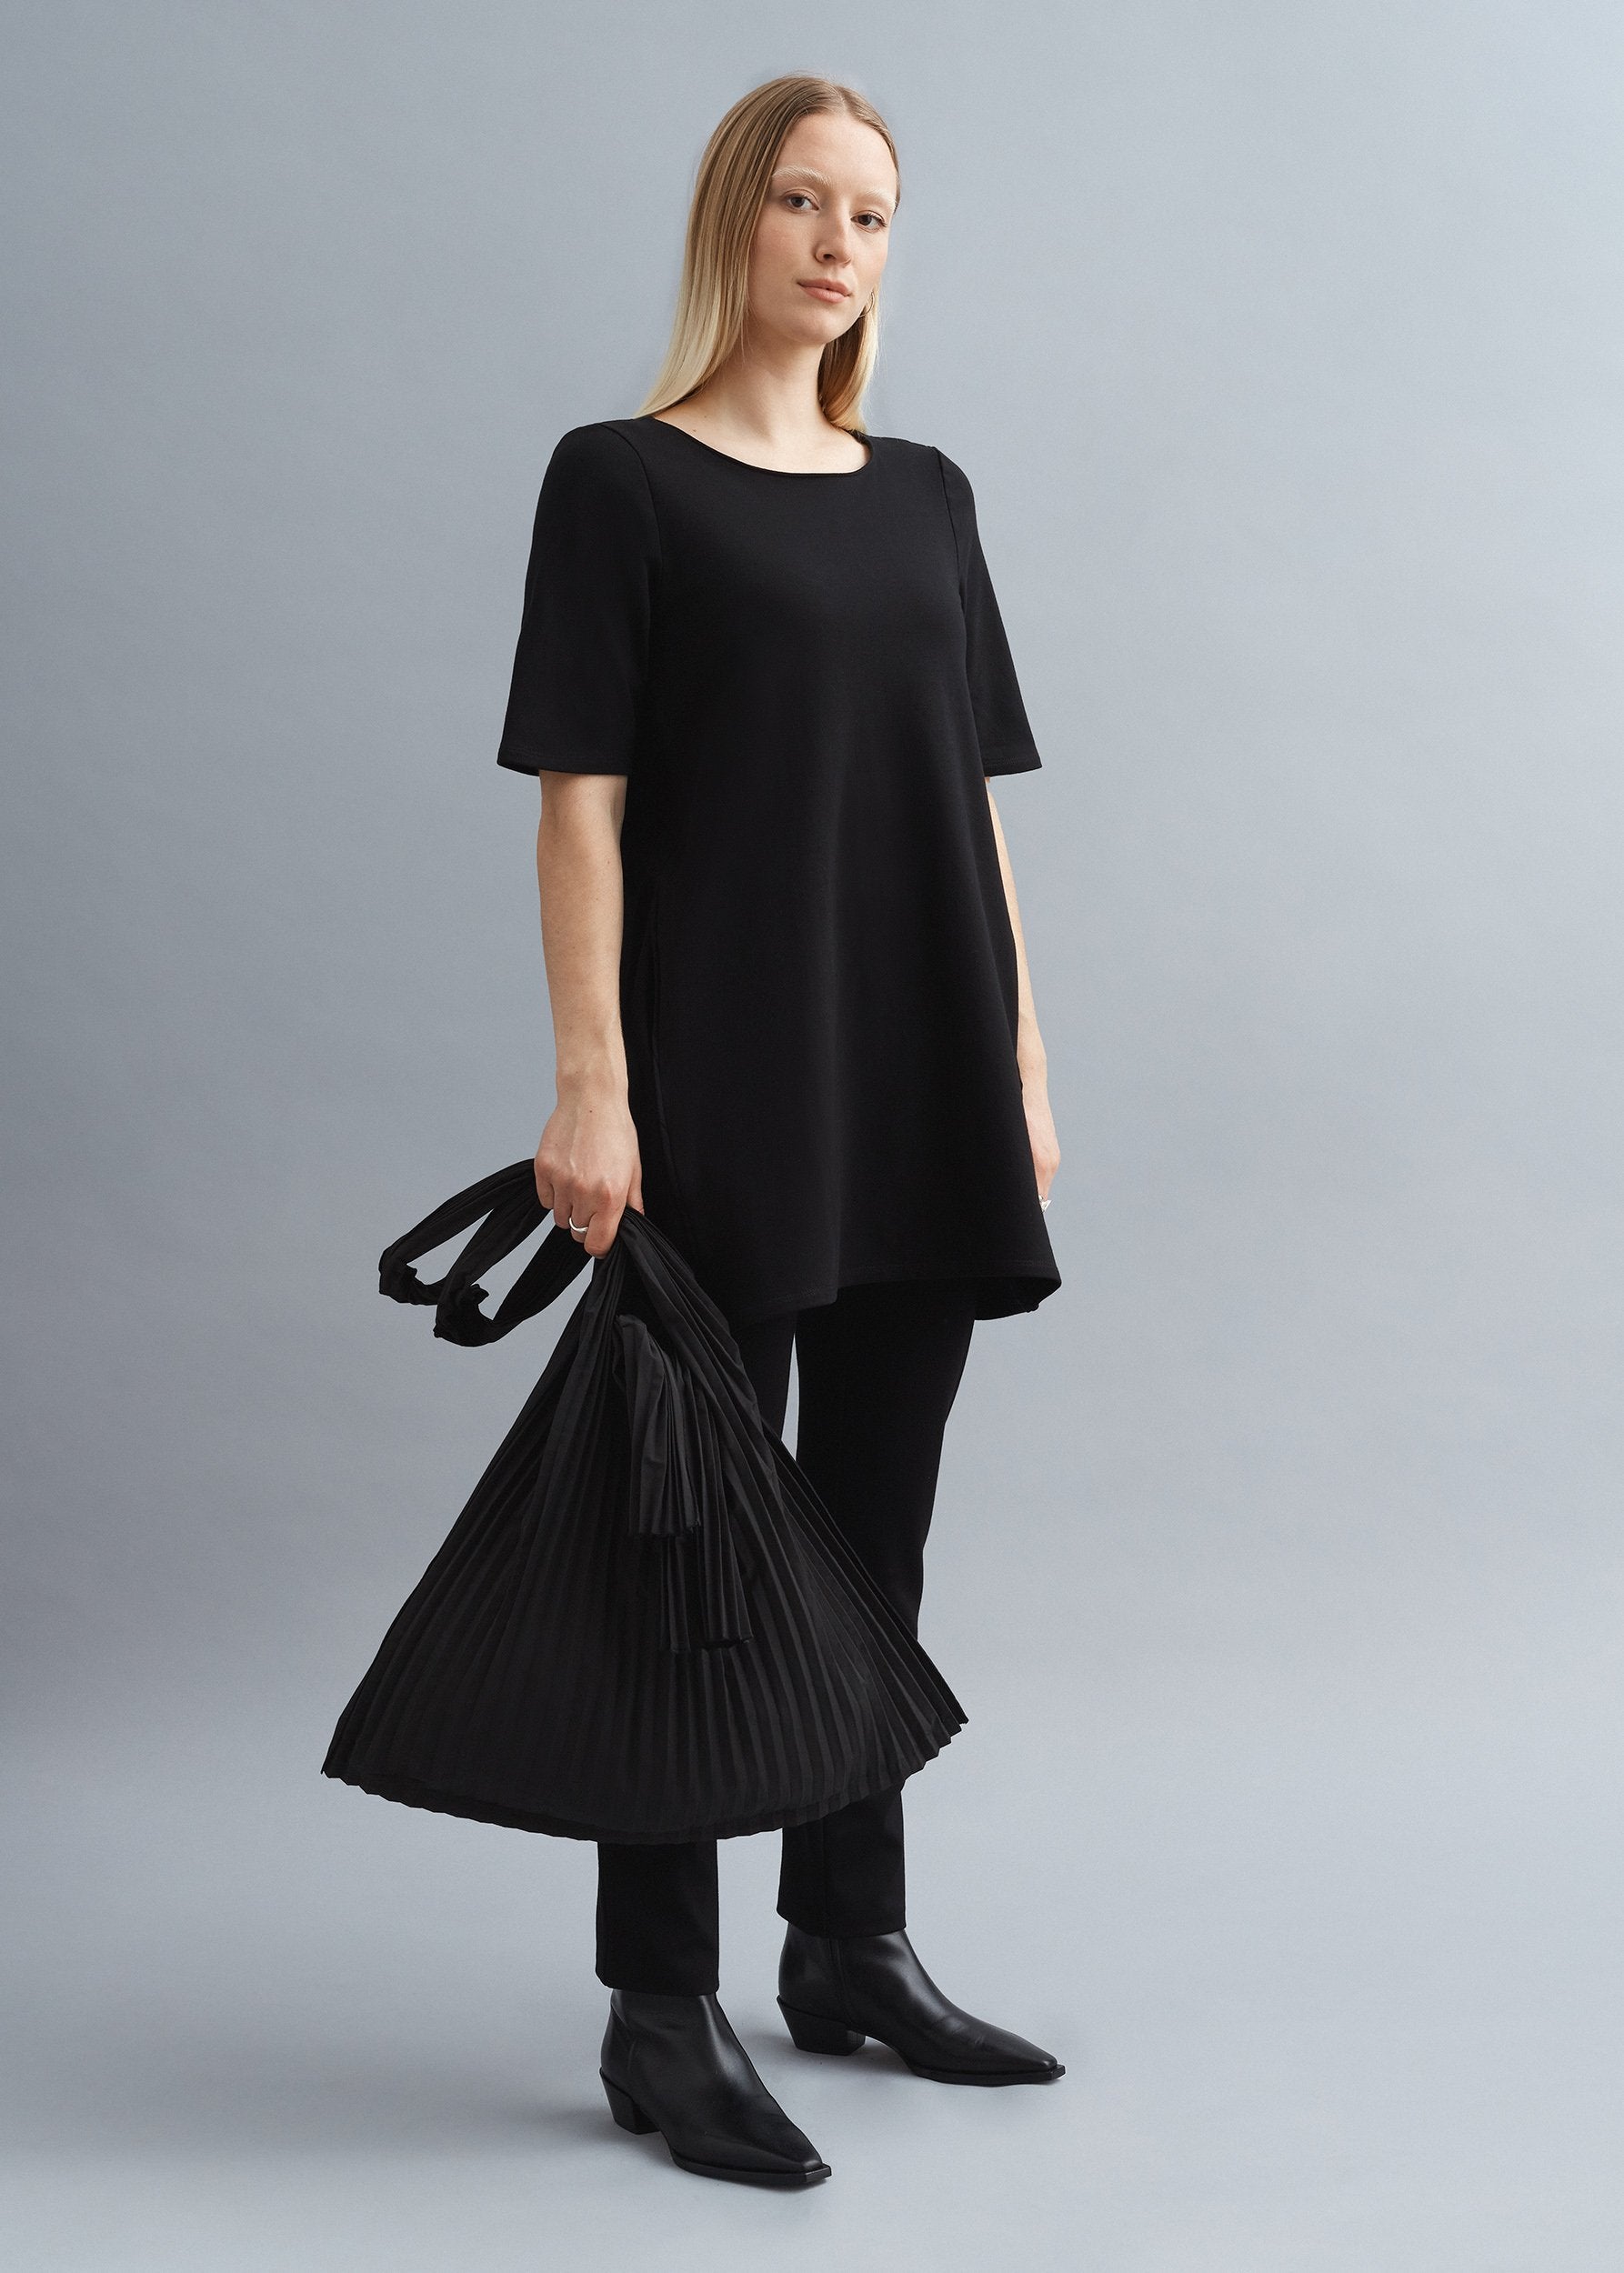 Plus Size Avie Front Drape Dress - Black